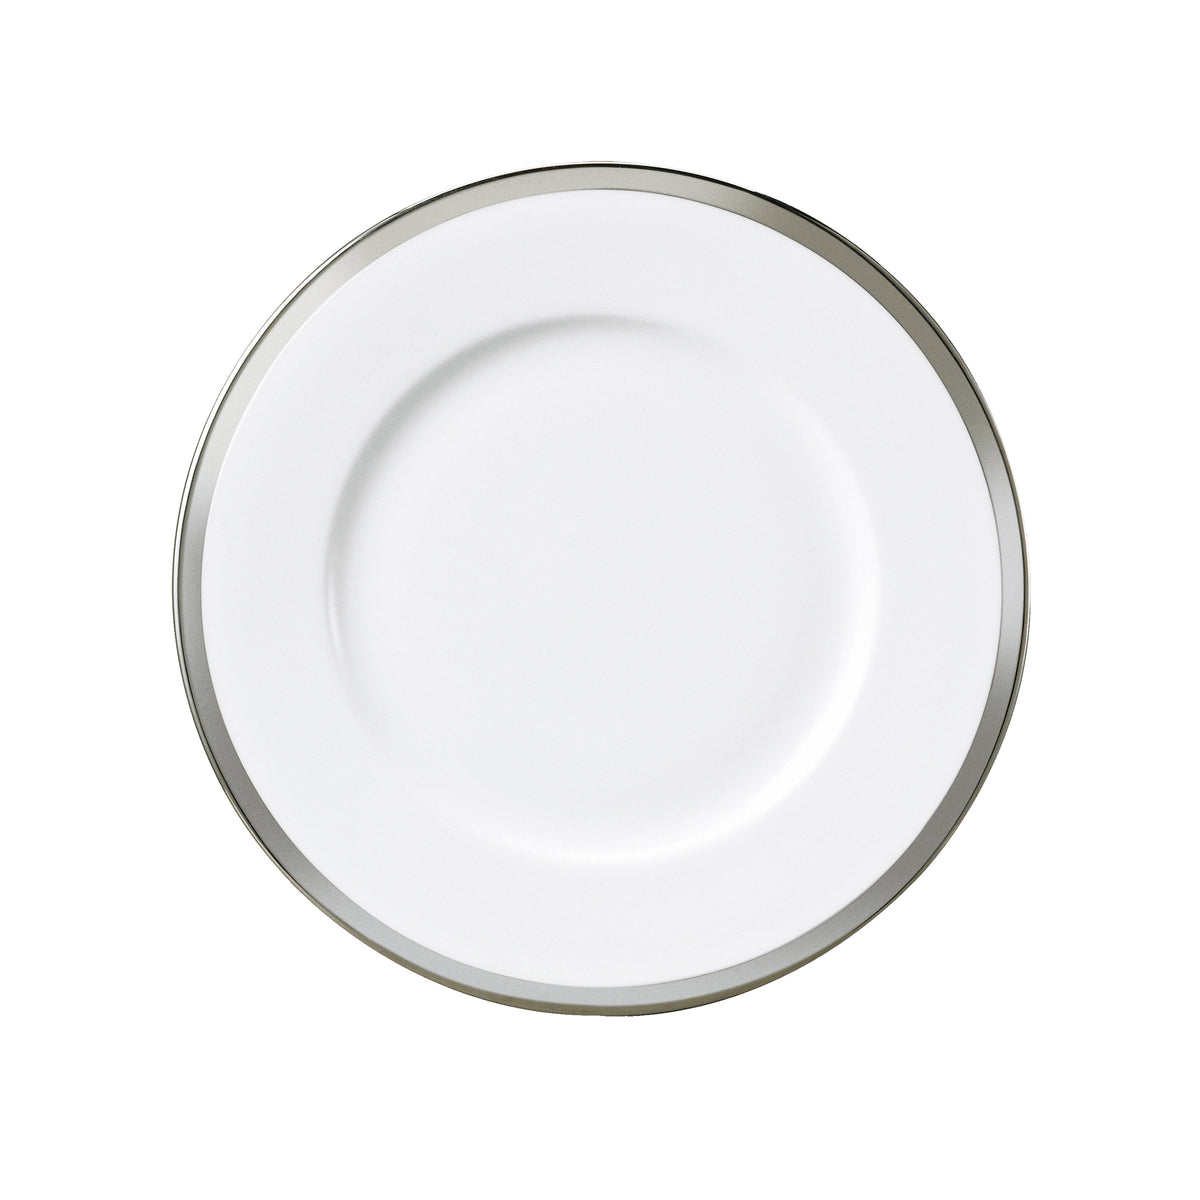 Prouna Diana Black / Platinum Salad / Dessert Plate White Background Photo